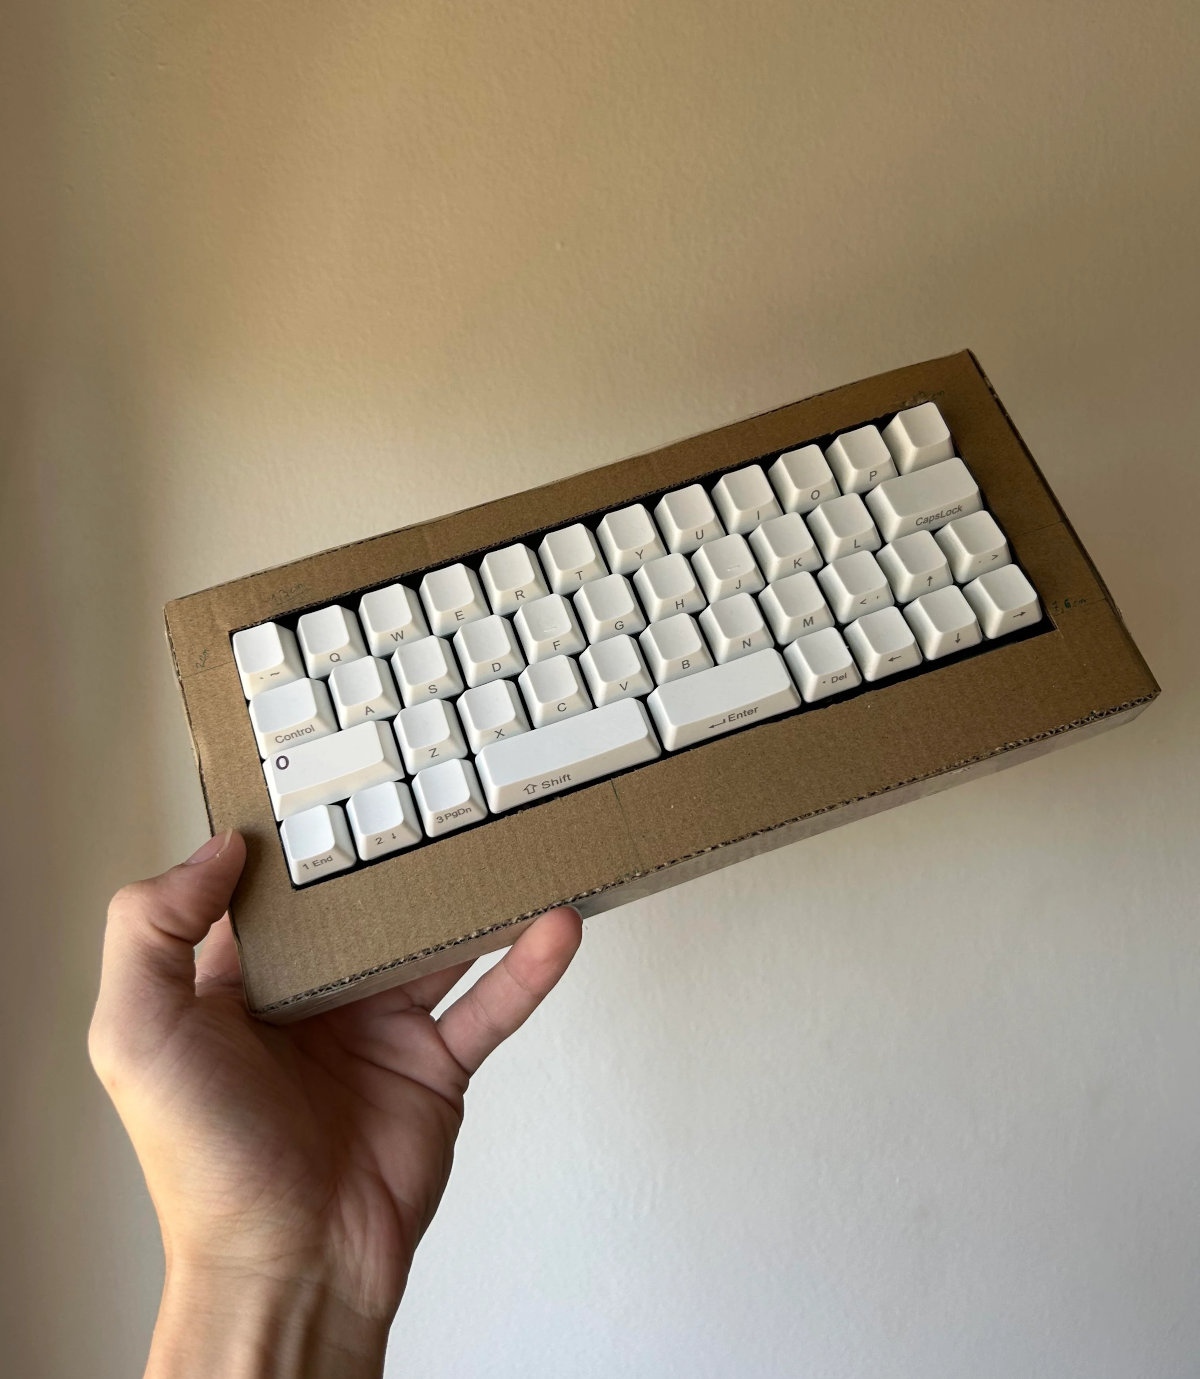 Pic: Cardboard keyboard case